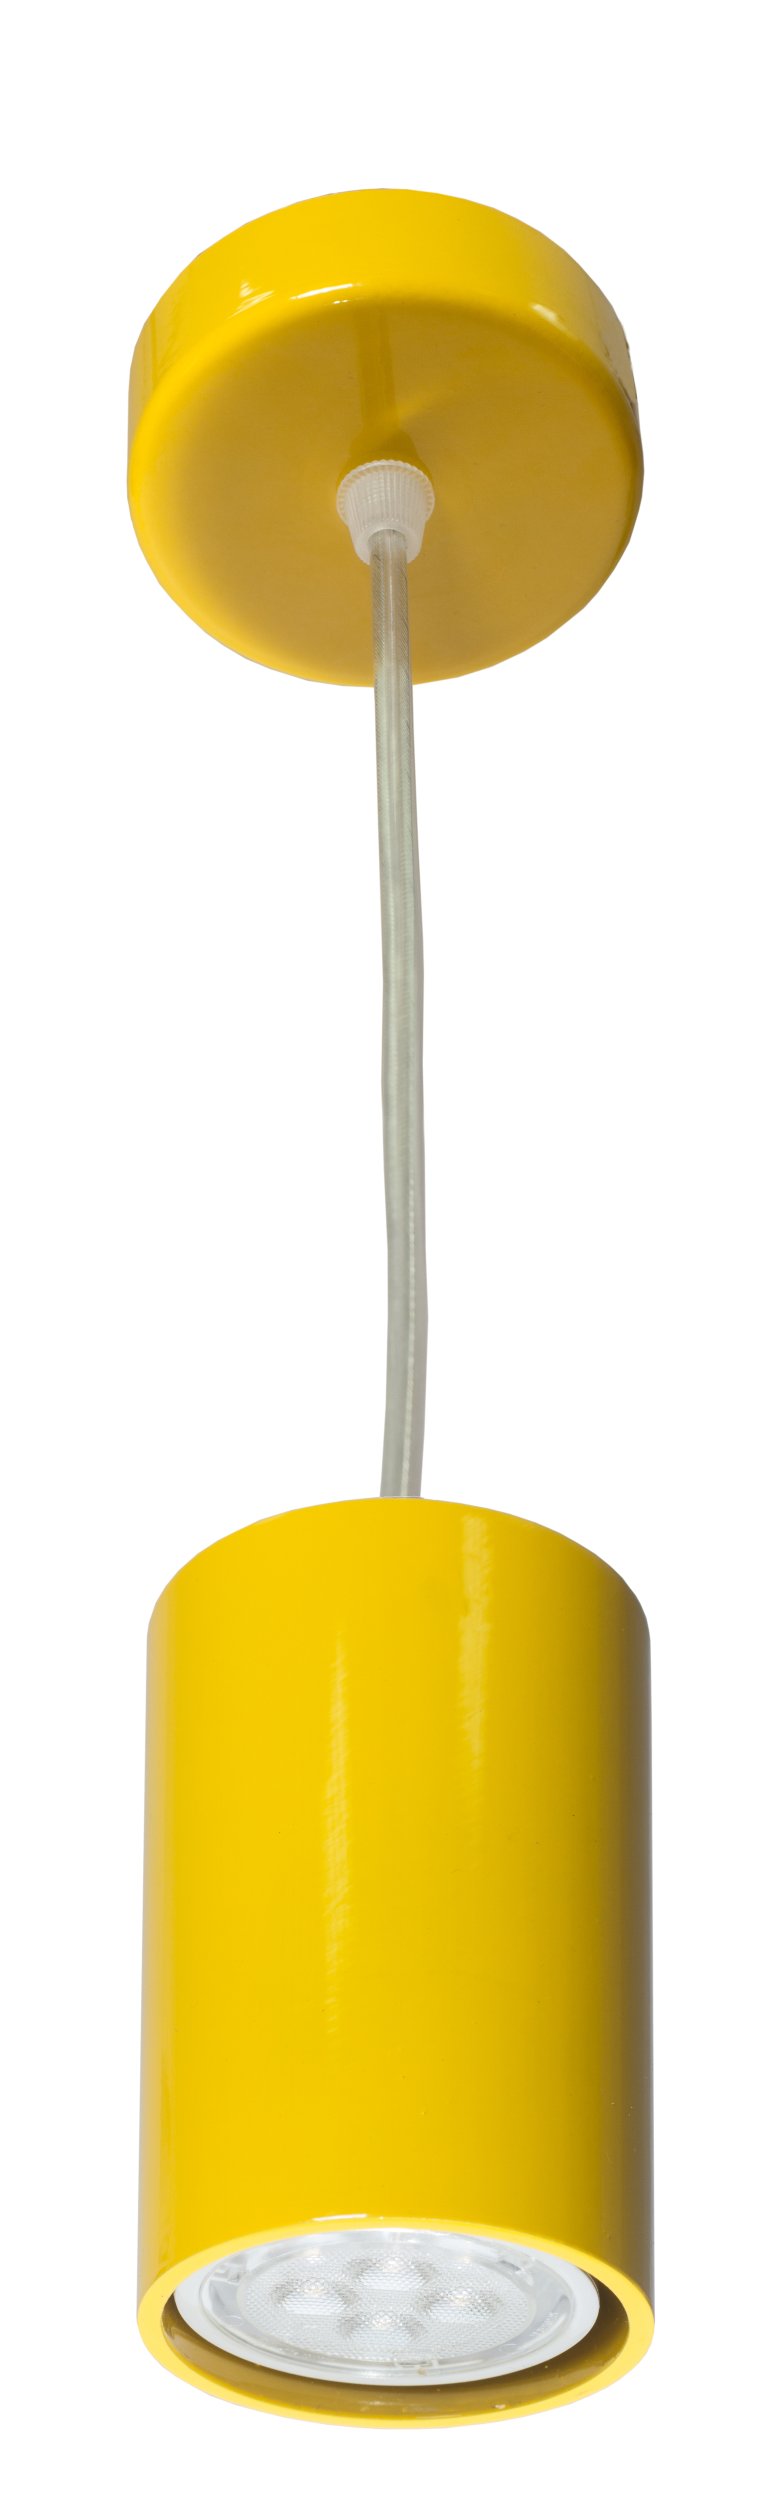 Светильник TopDecor TUBO6 S1 16, цвет желтый - фото 1